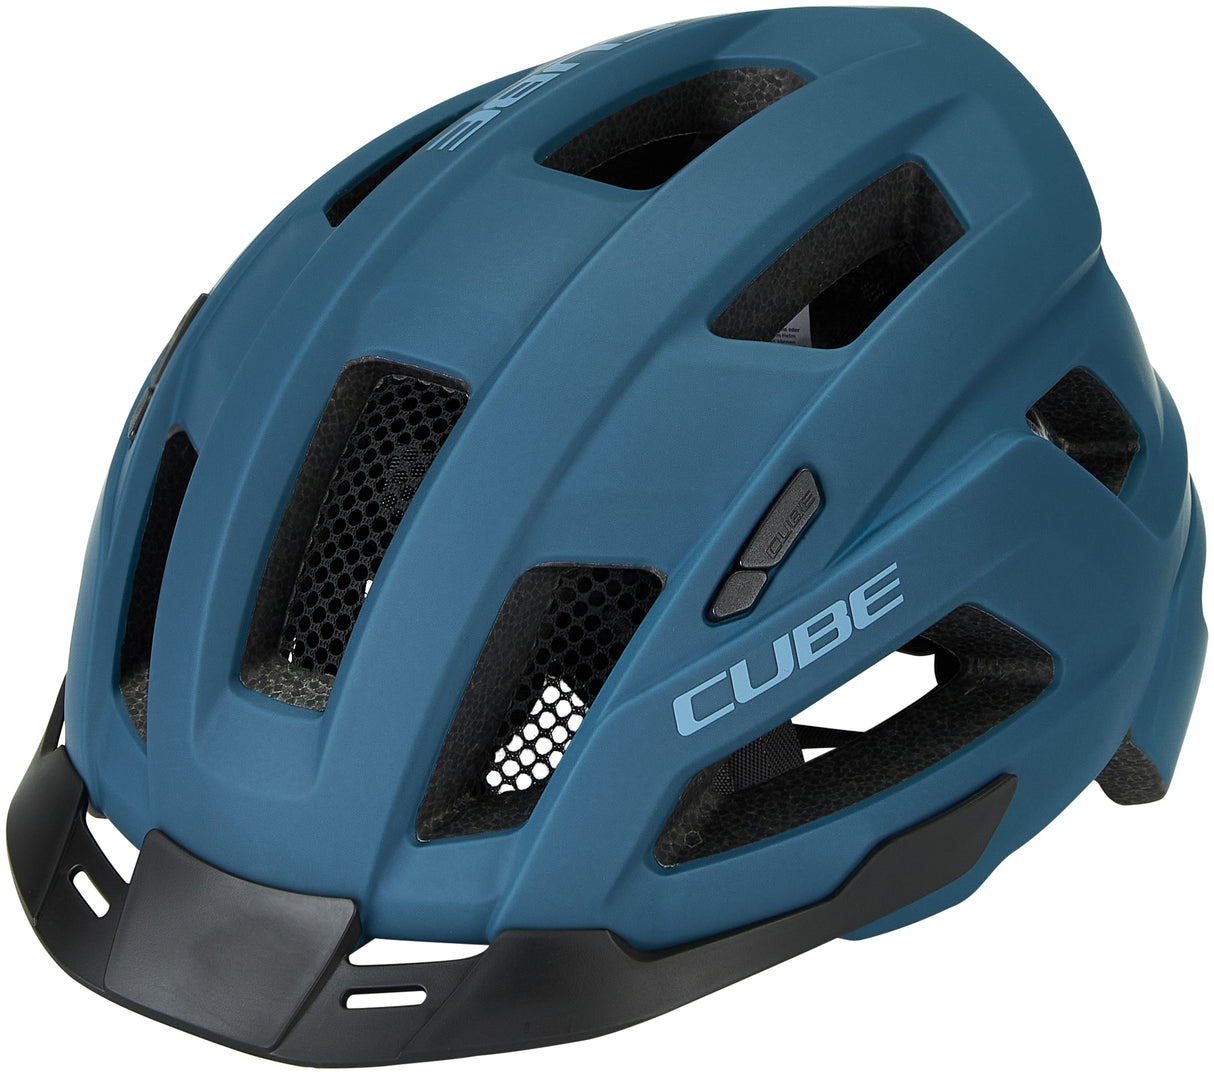 CUBE helm CINITY blauw